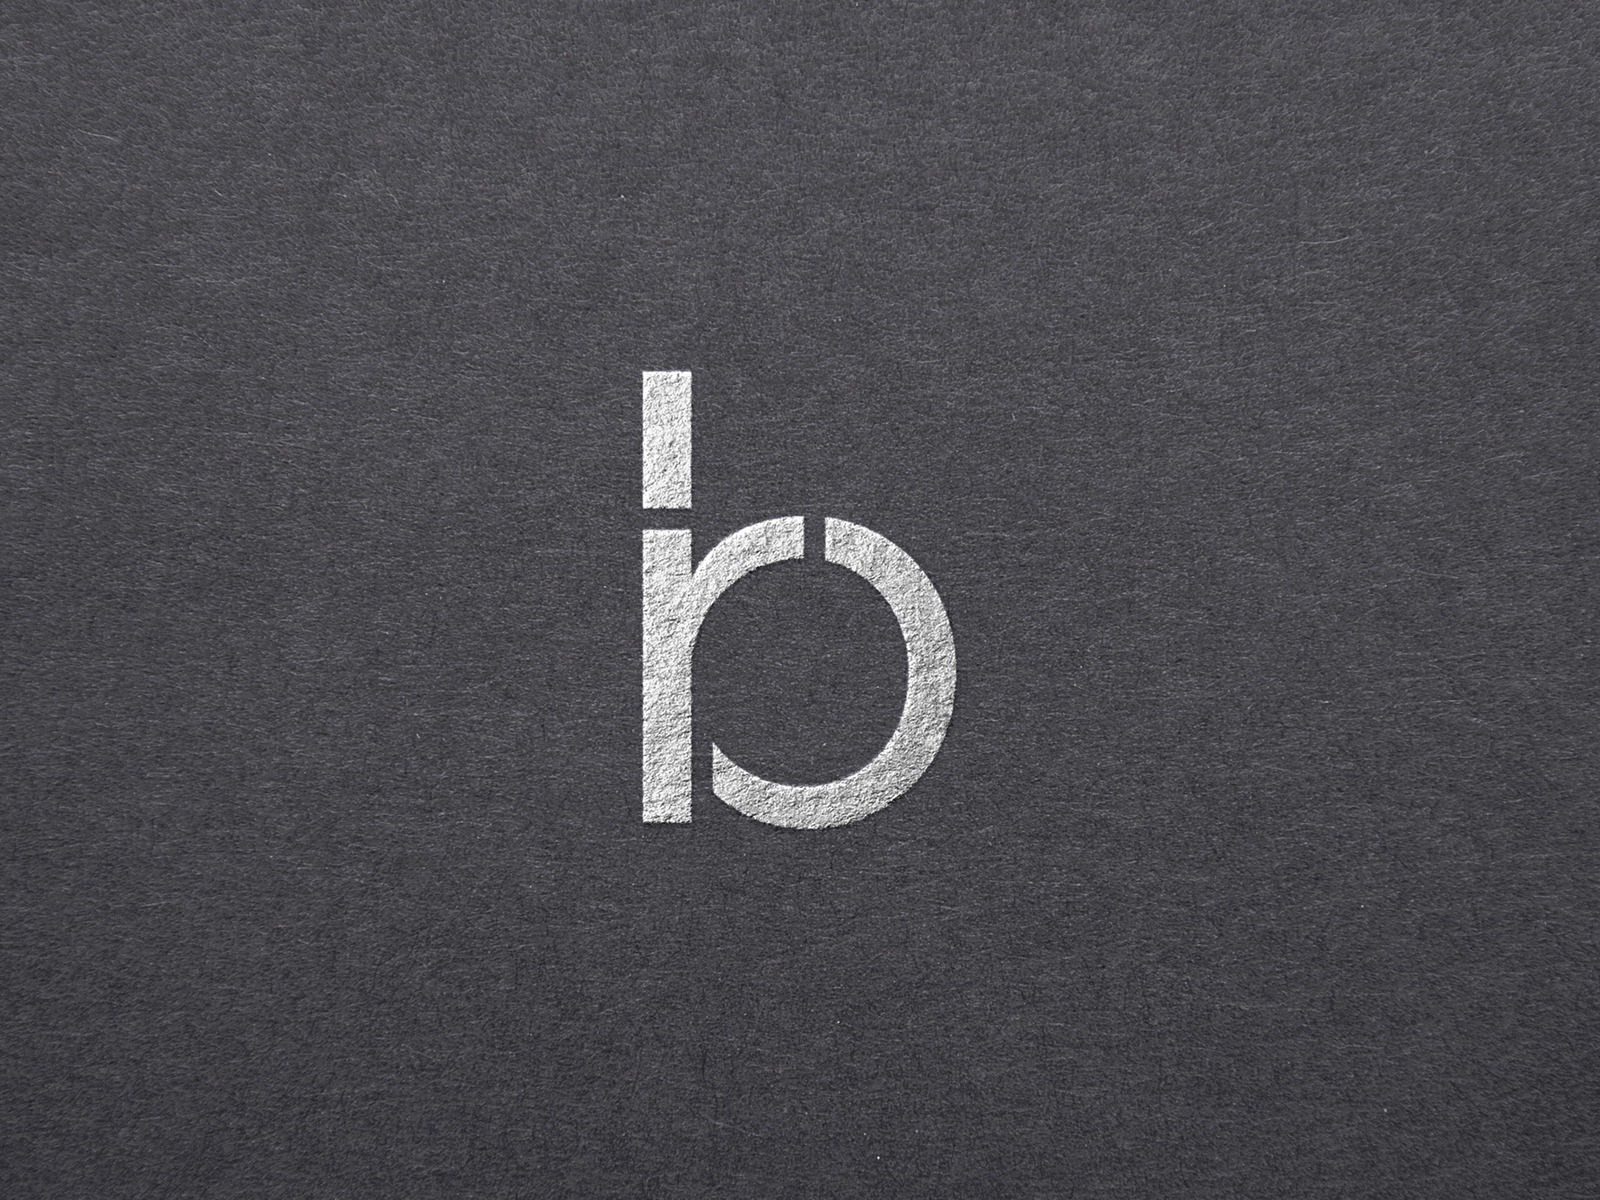 rb logo by Marlon Studio on Dribbble